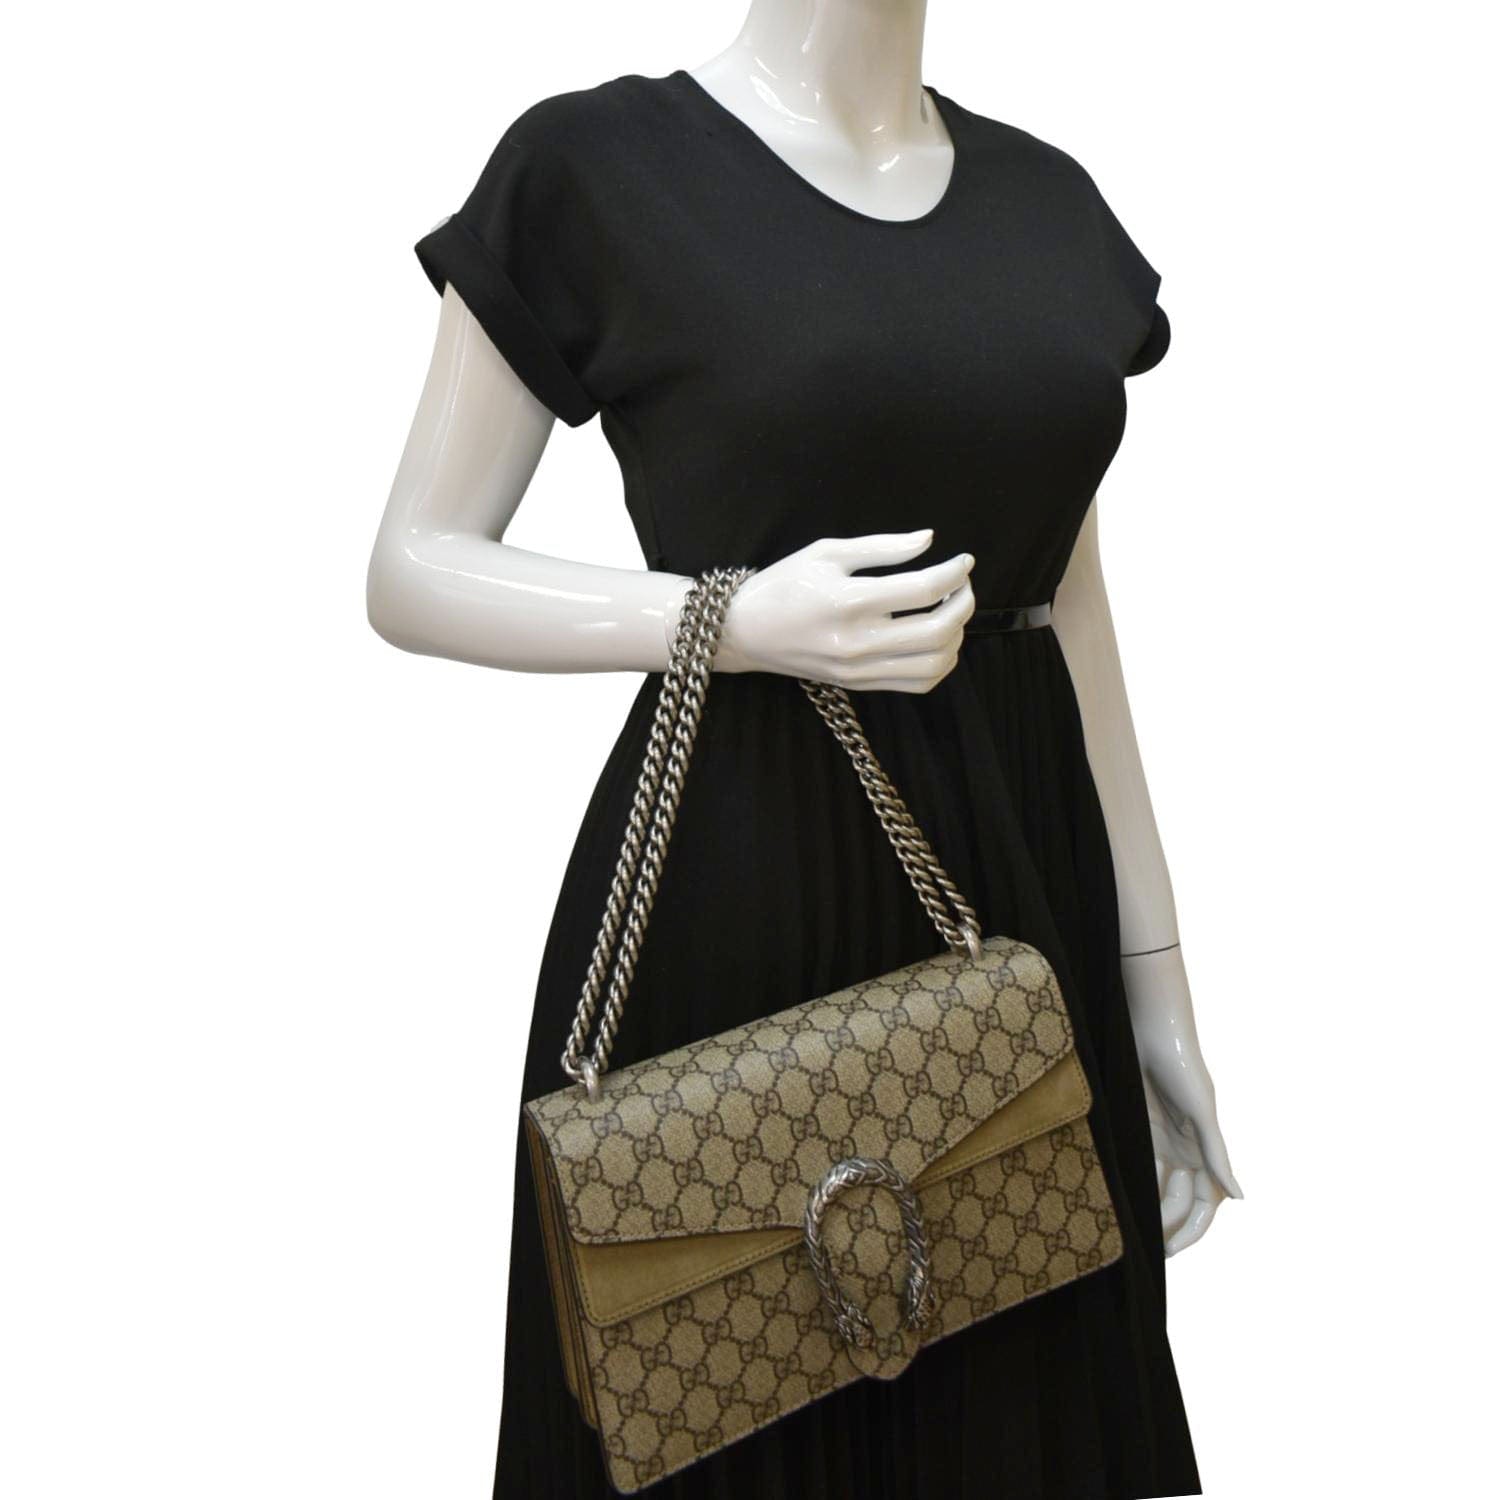 Dionysus gg supreme shoulder bag - Gucci - Women